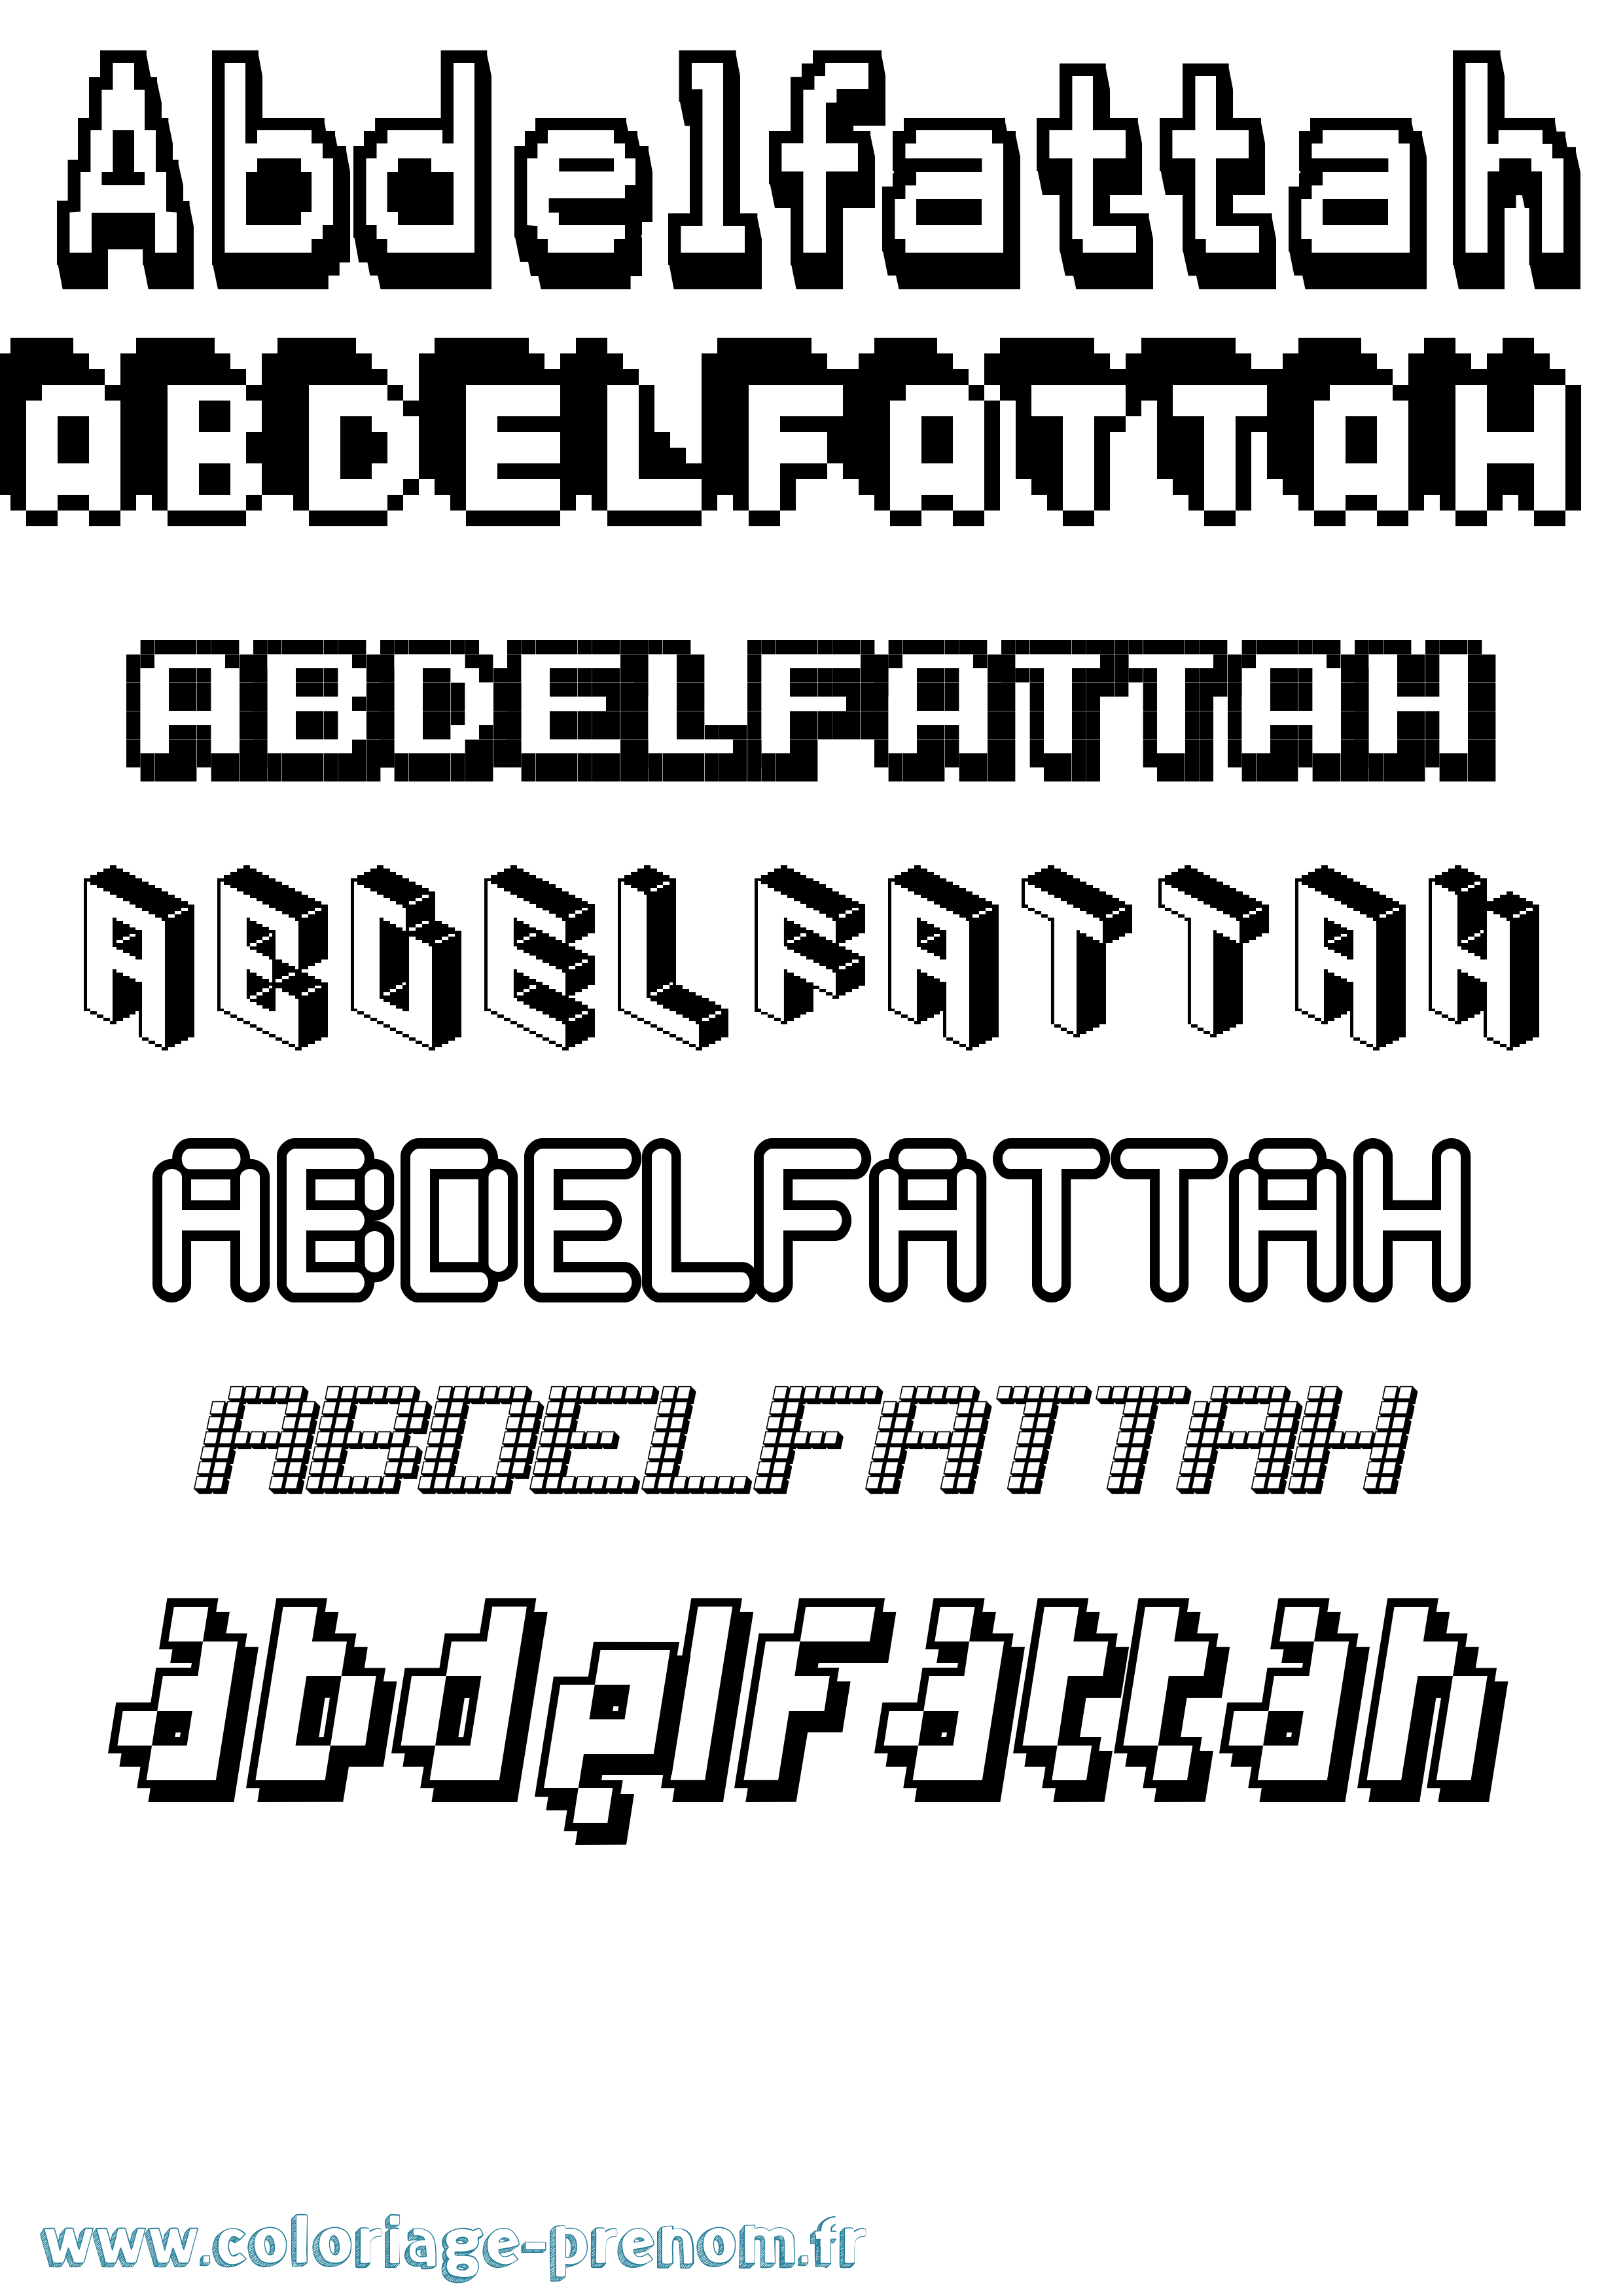 Coloriage prénom Abdelfattah Pixel